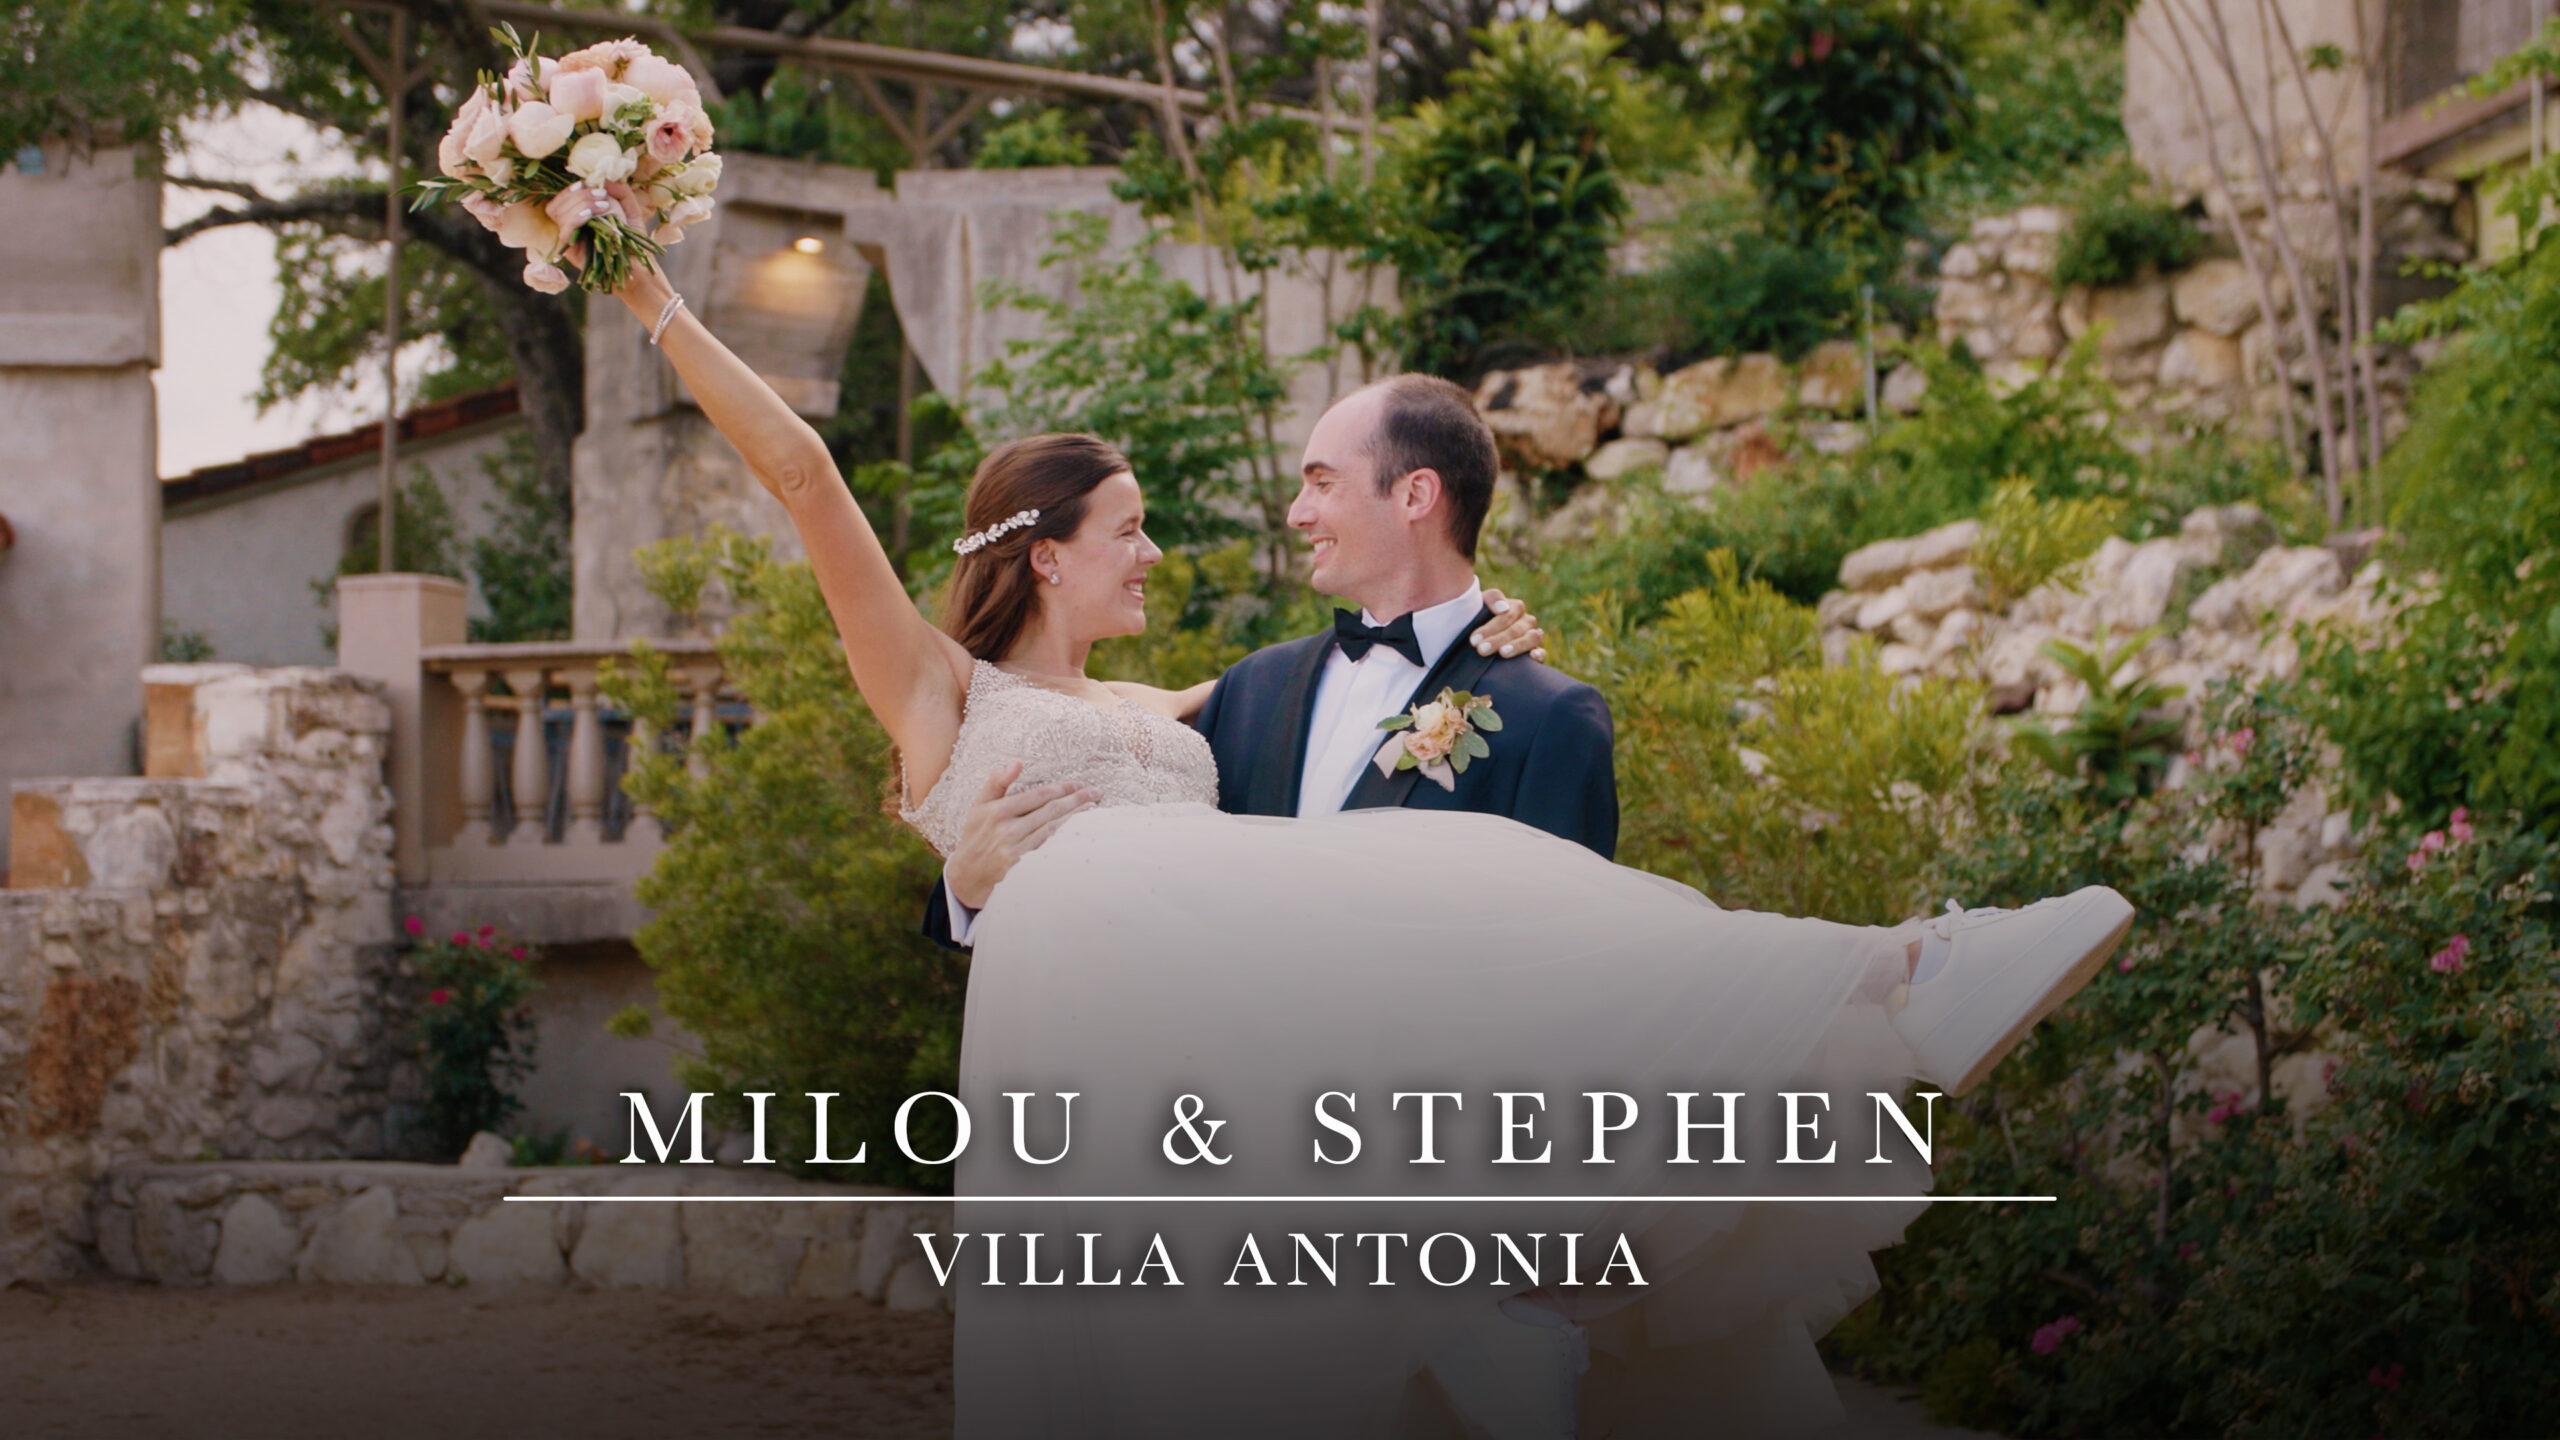 Milou and Stephen wedding at Villa Antonia